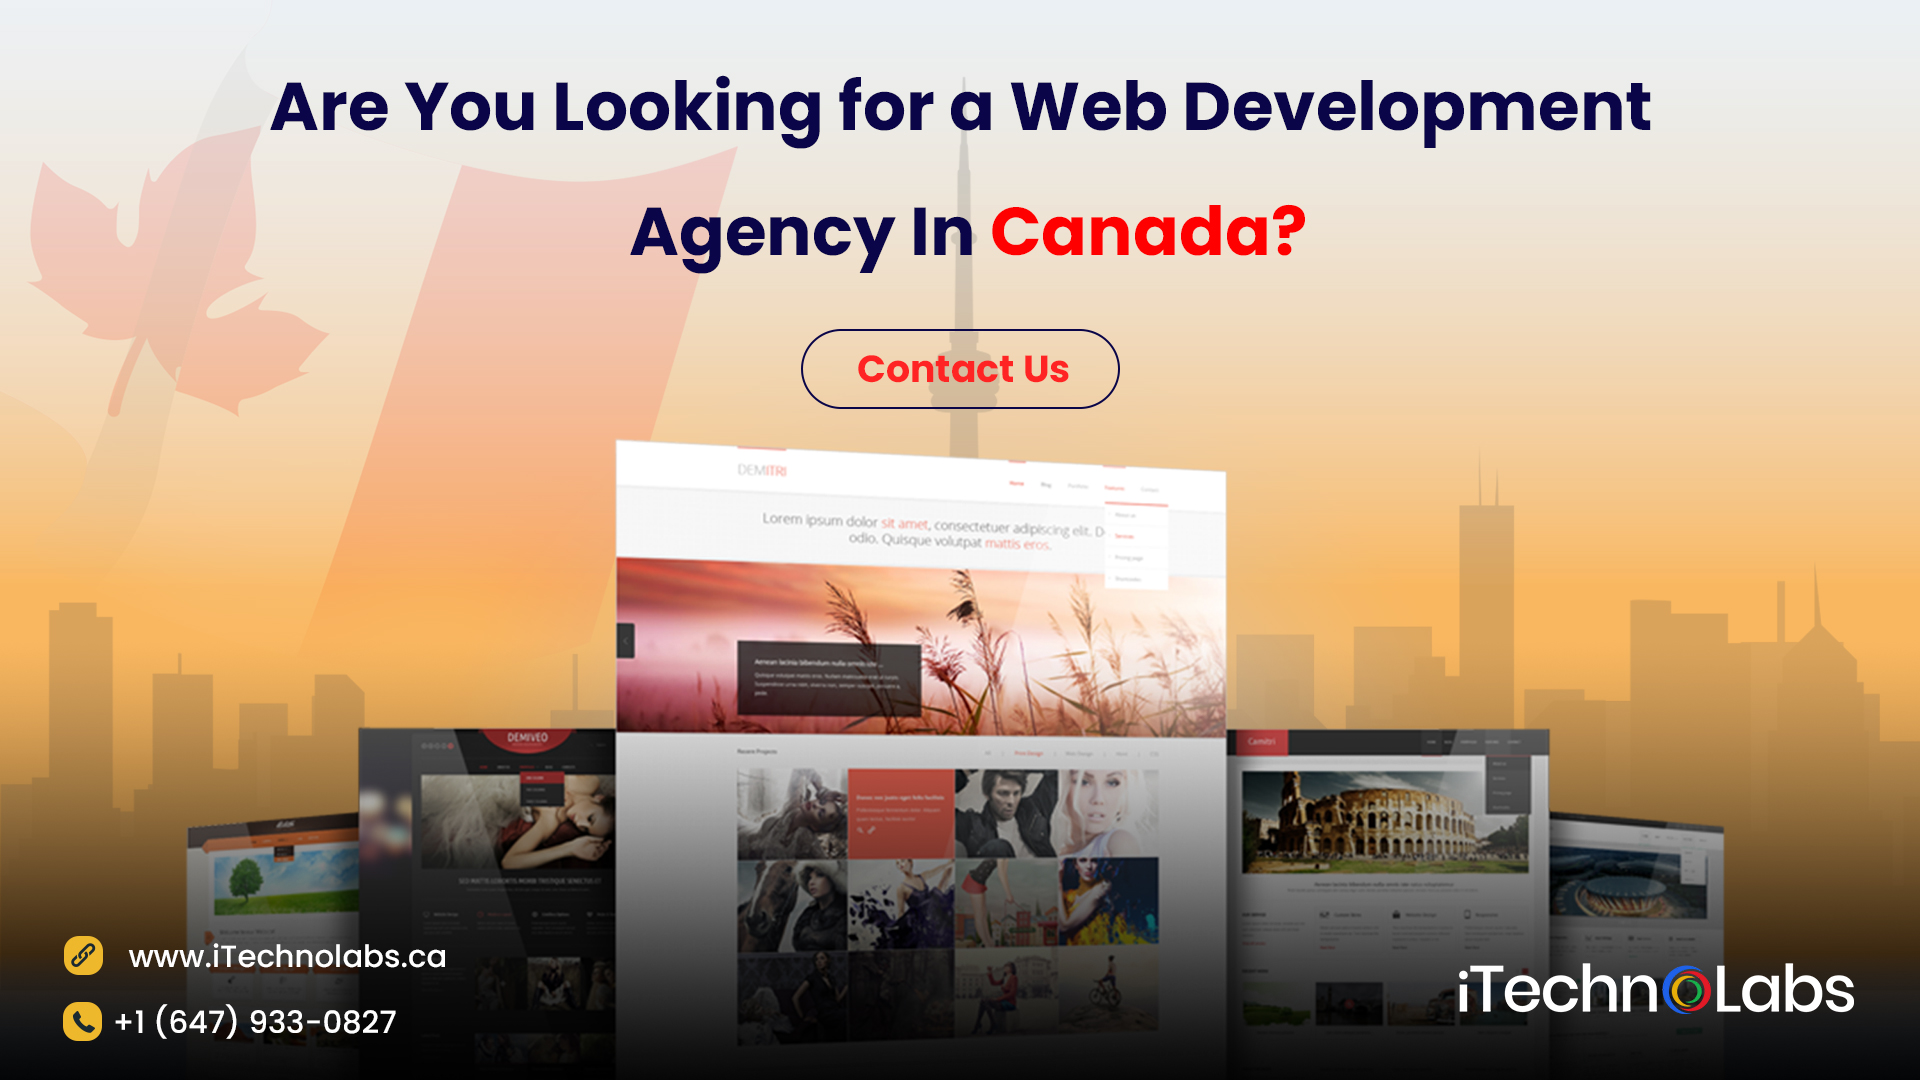 itechnolabs web development agency in canada 